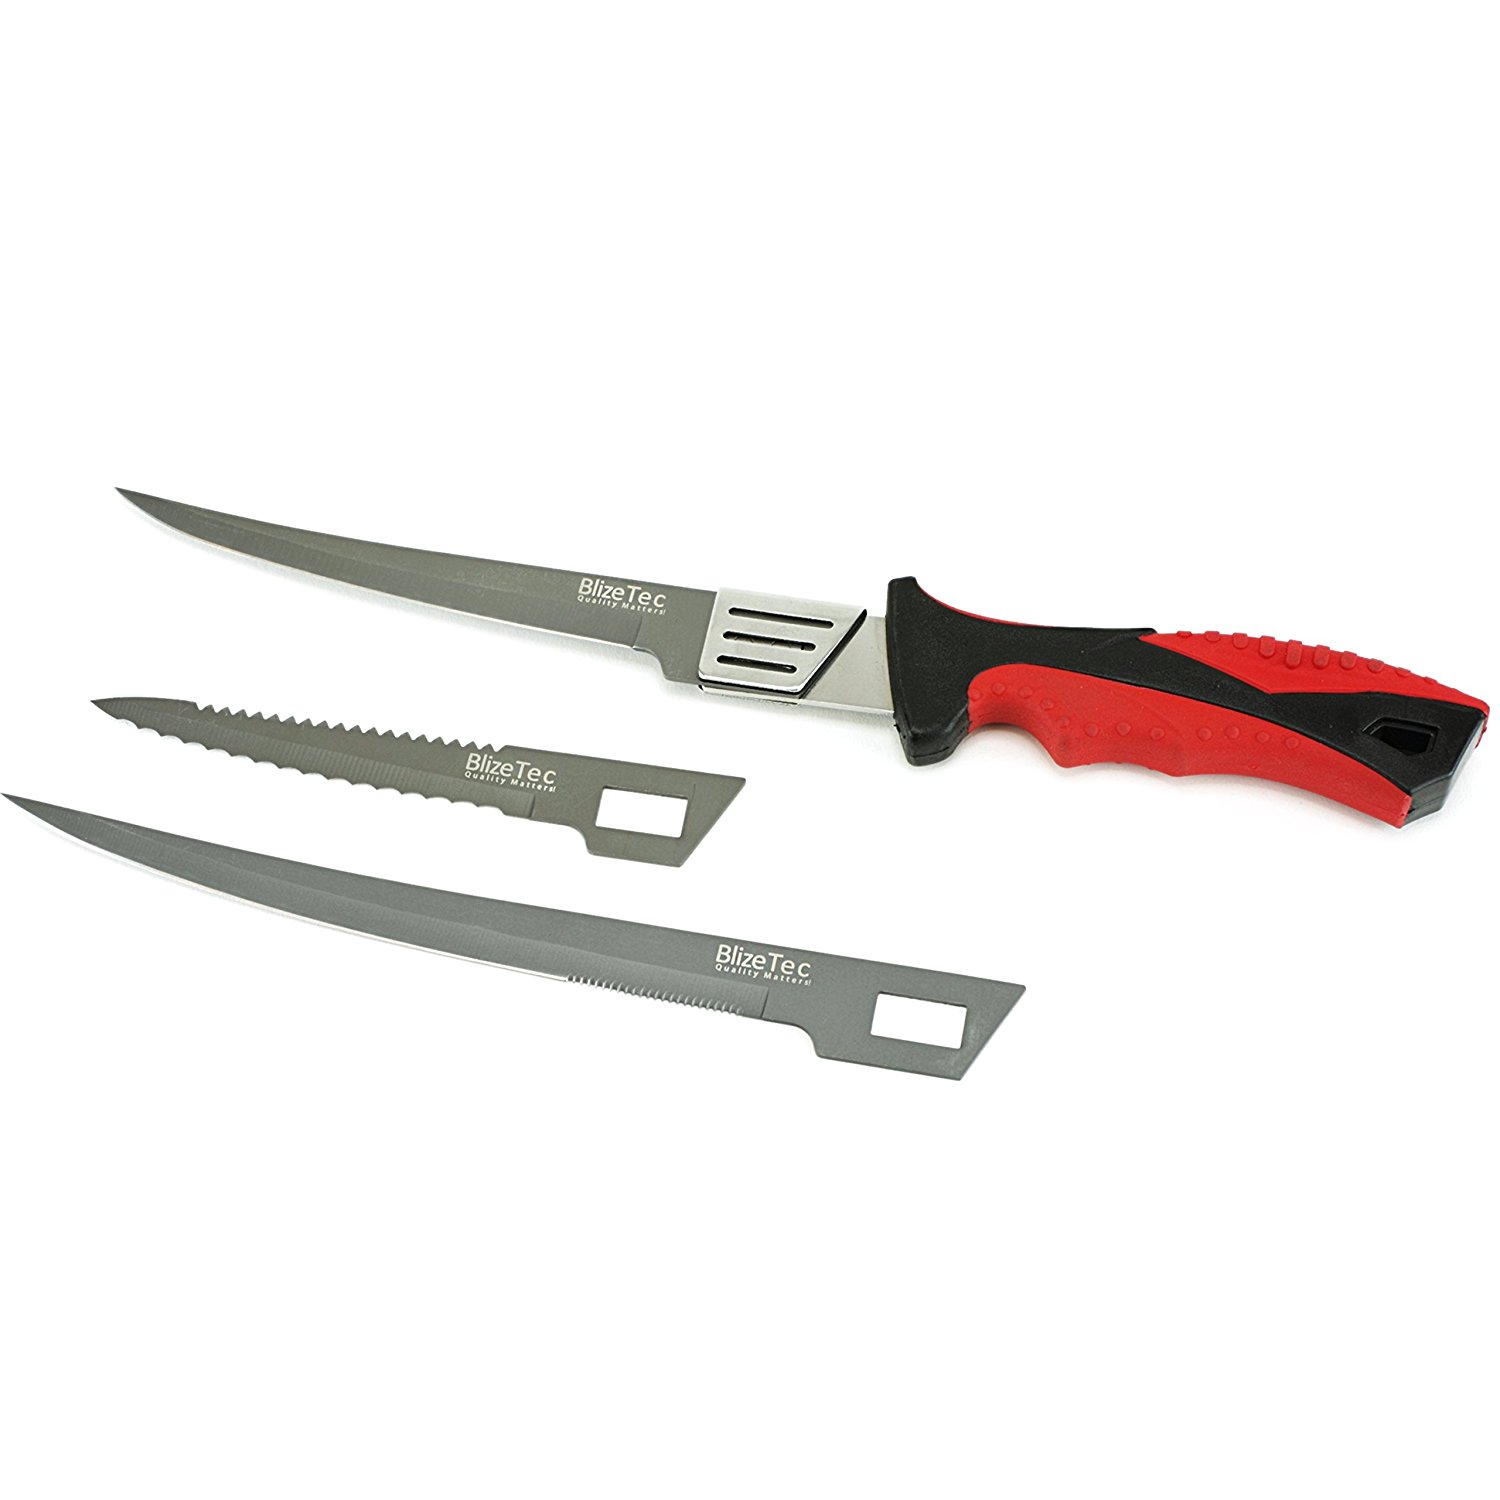 BlizeTec Fillet Knife: Portable Boning, Scaling and Fishing Knives